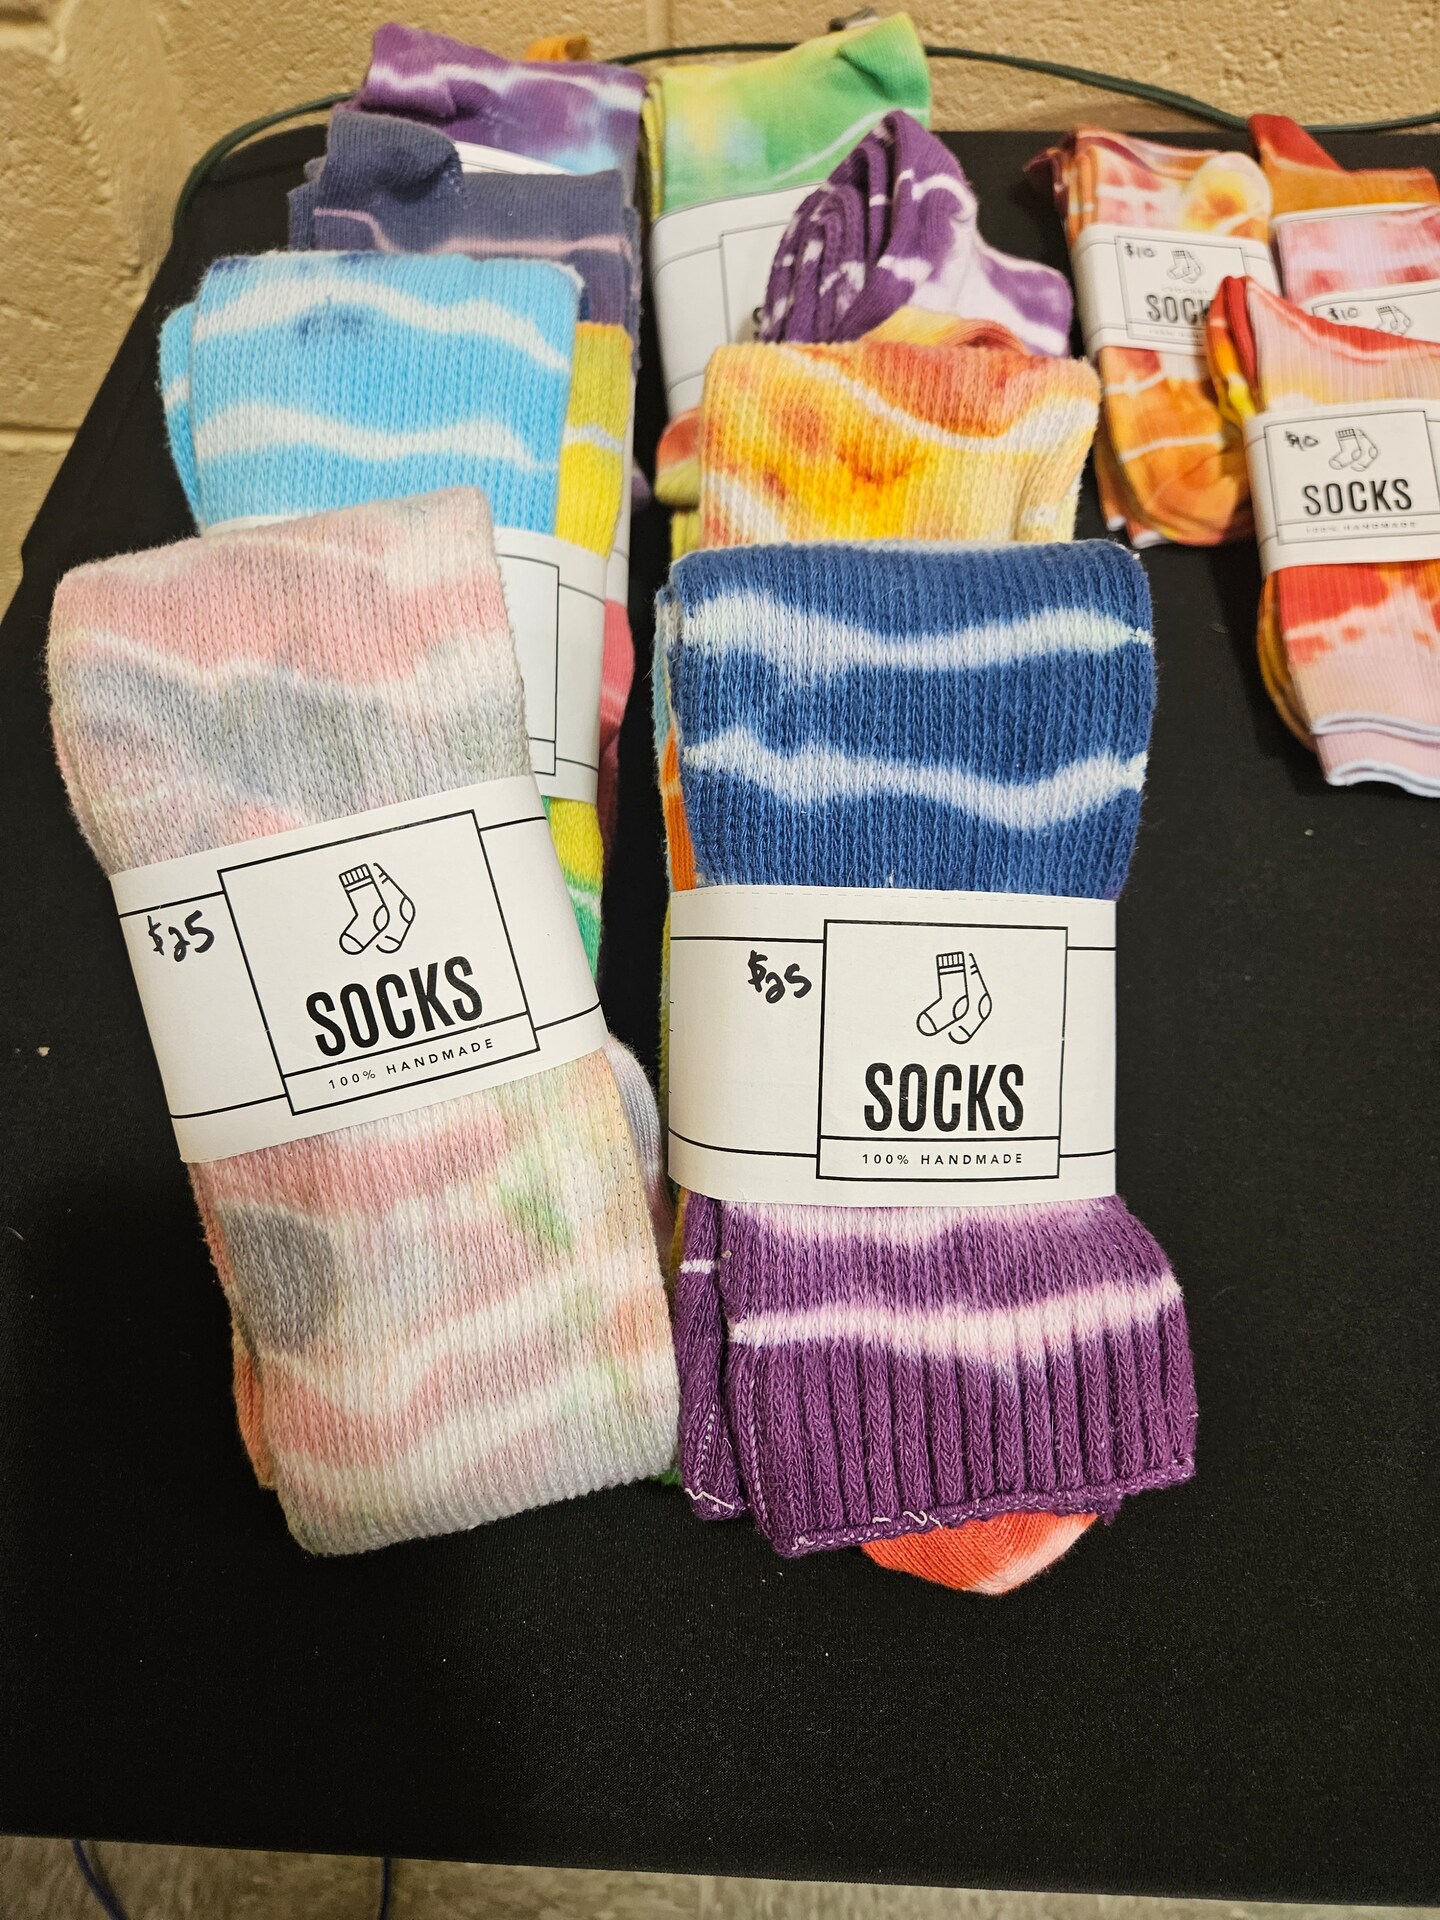 Merino Tube Socks in Ink tie-dye – Satisfy